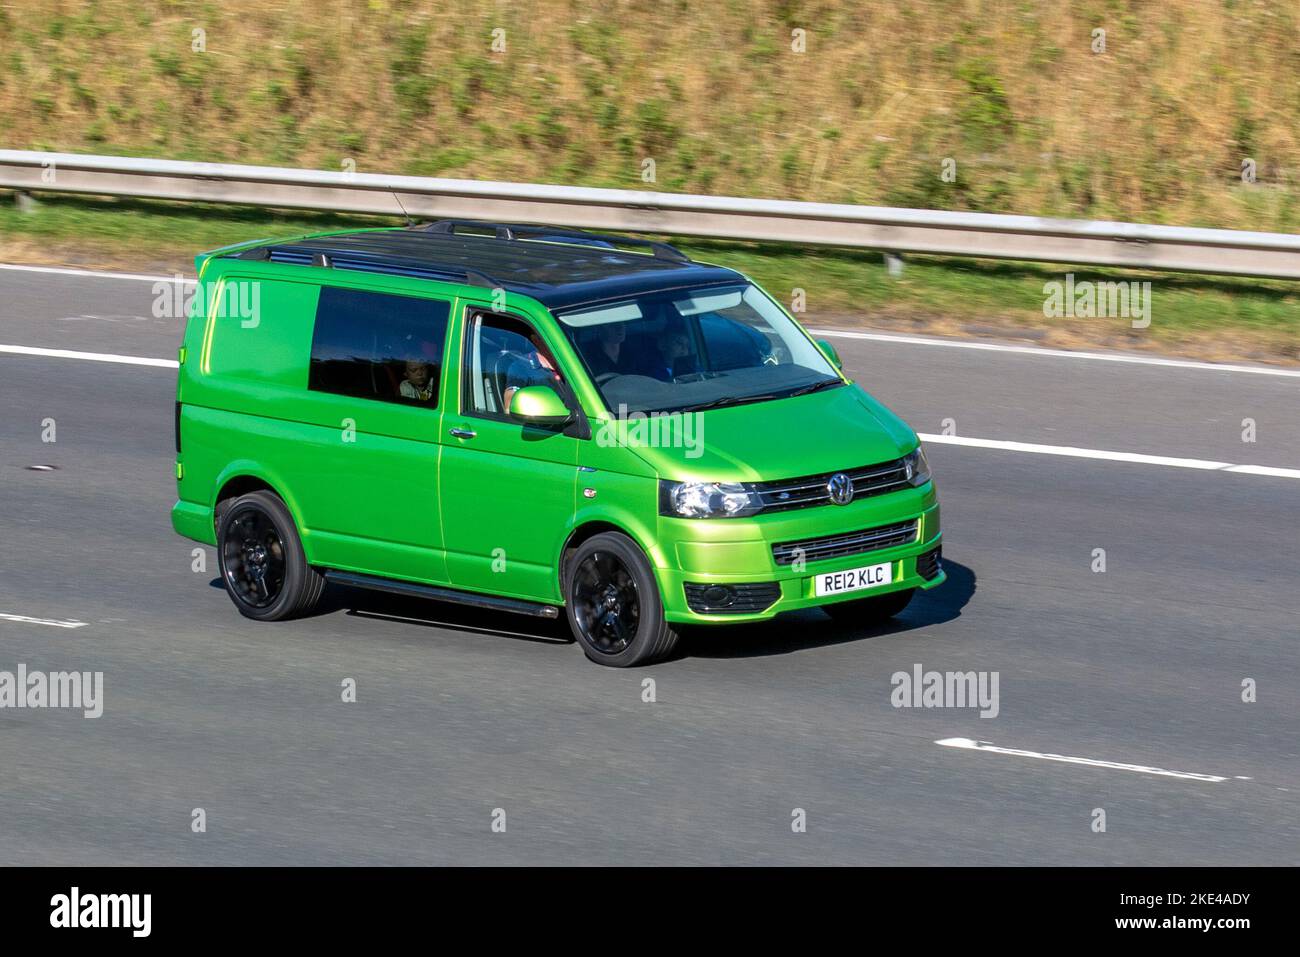 2021 Green VW Volkswagen Tdi 84 SWB LCV Panel Van travelling on the M6 motorway, UK Stock Photo